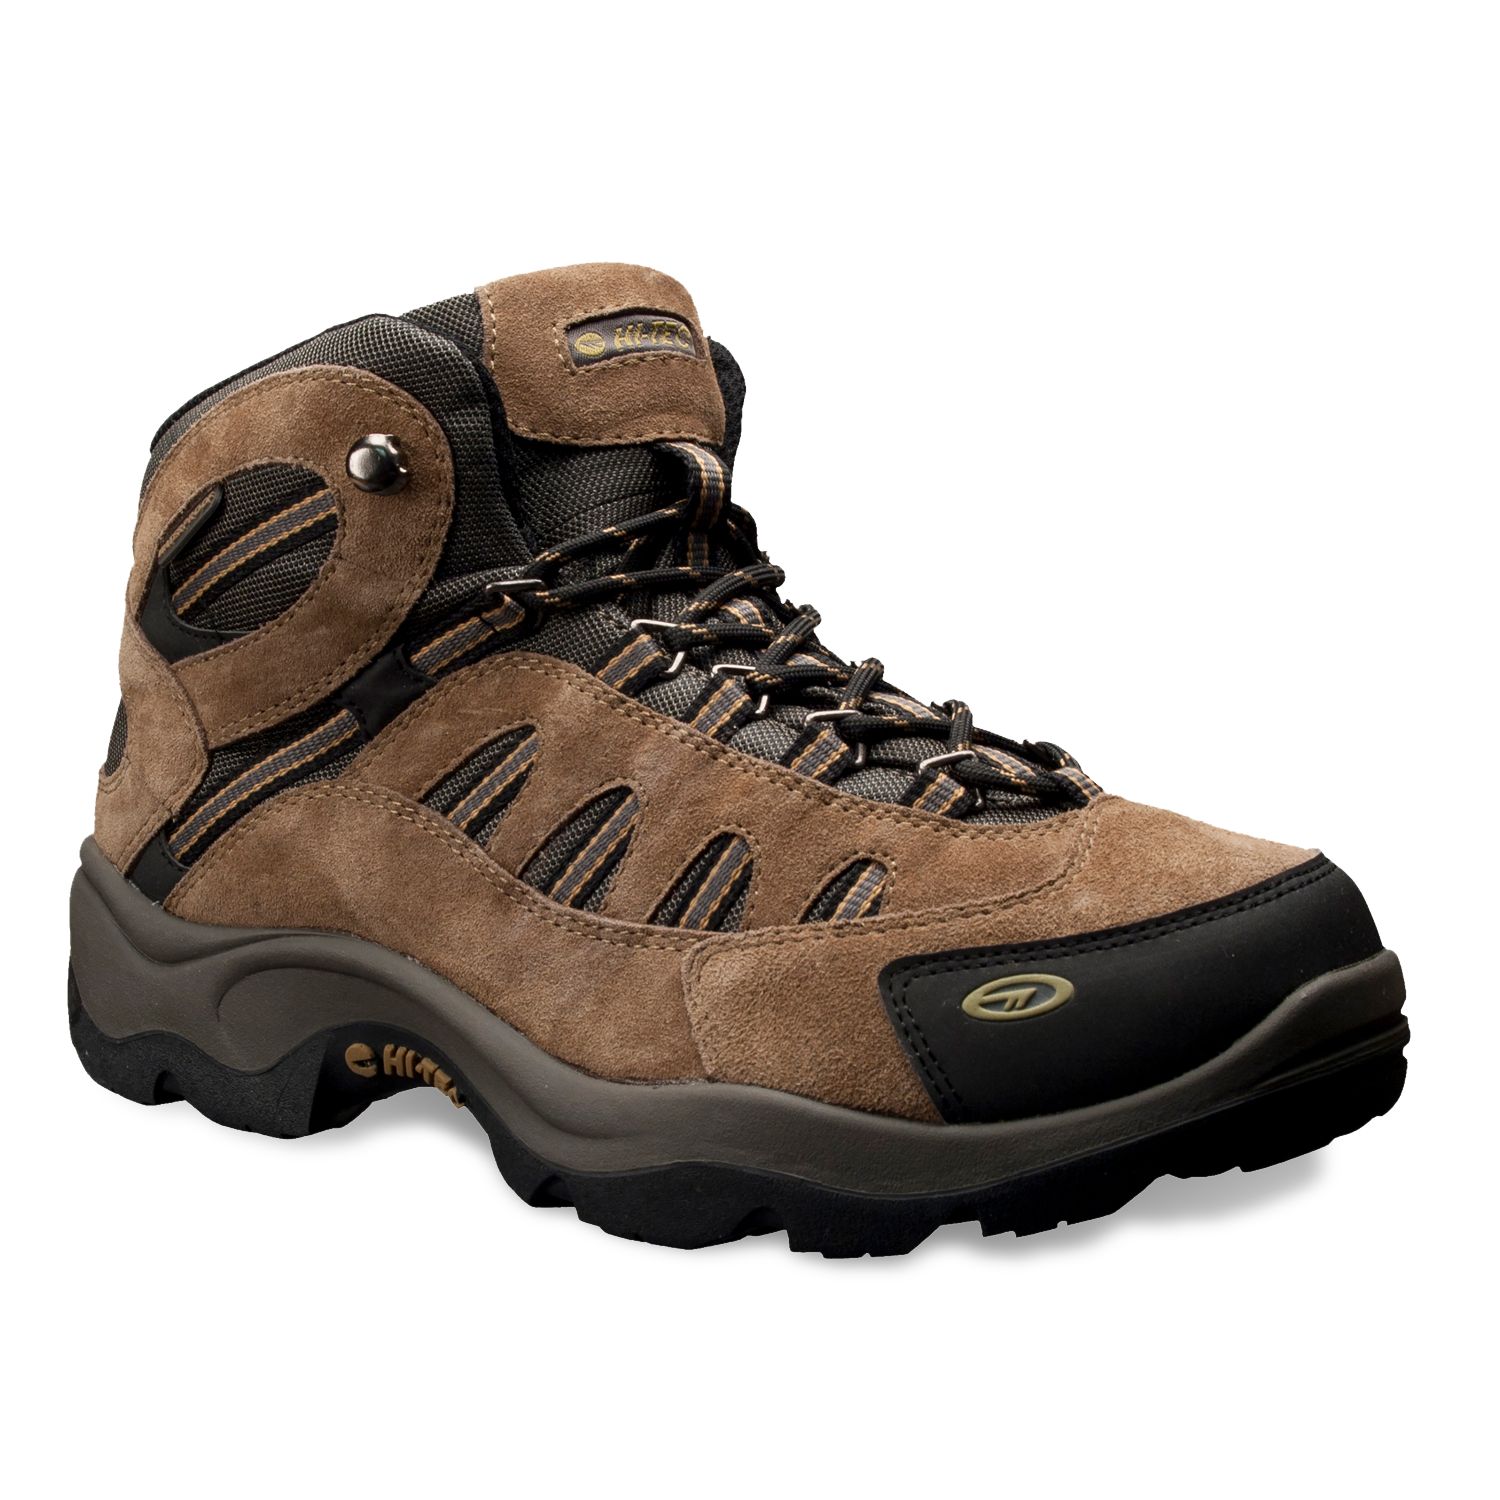 skechers relaxed fit rolton elero men's waterproof hiking boots